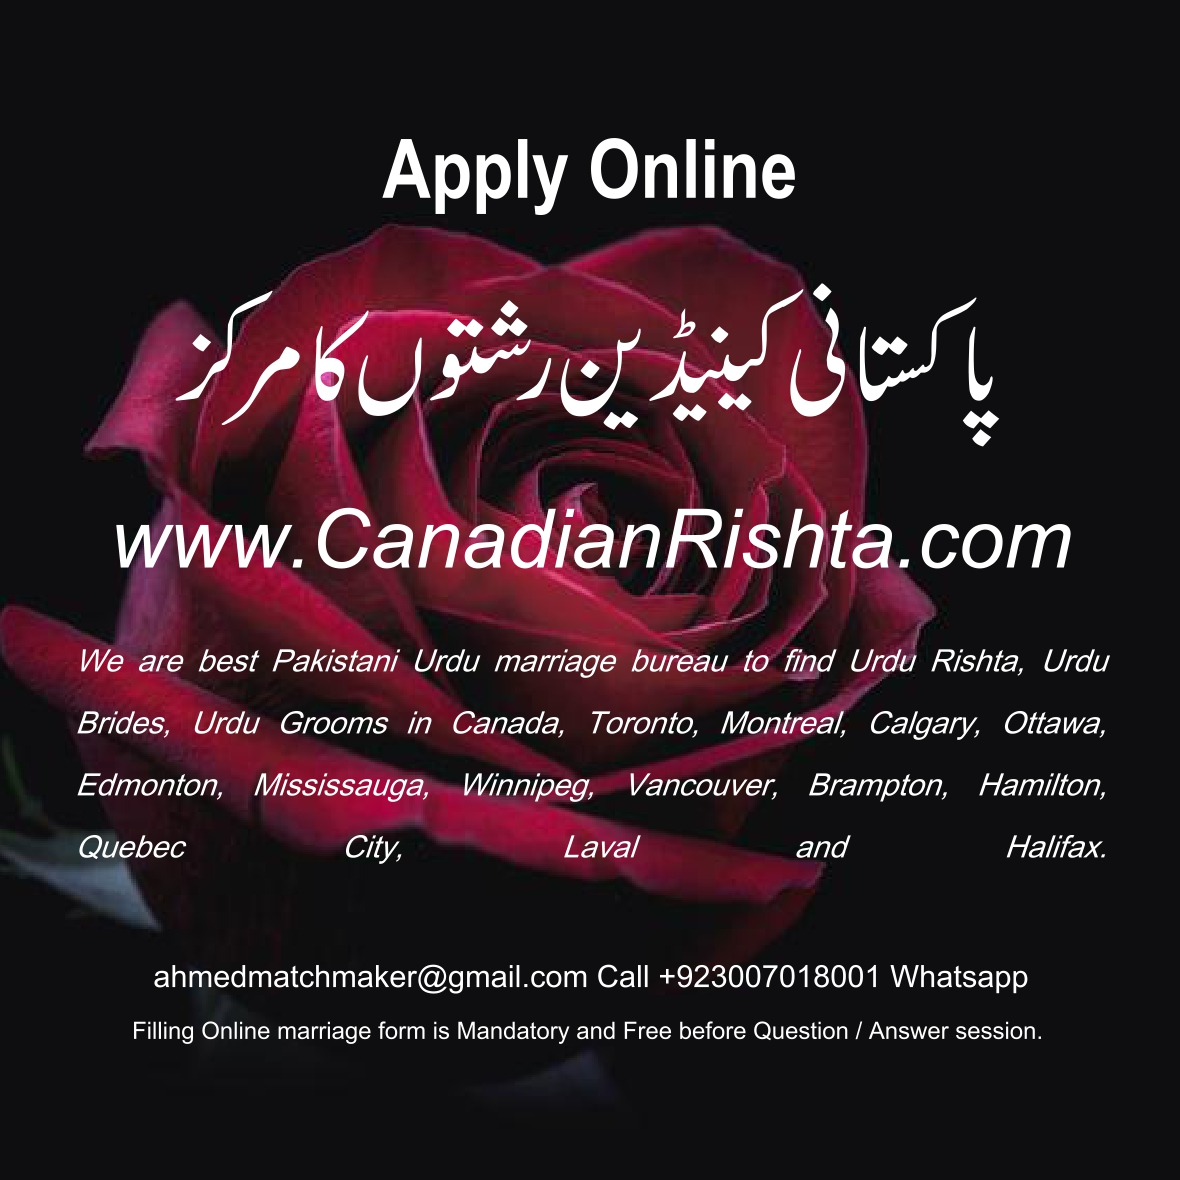 Pakistani-rishta-shaadi-marriage-bureau-Canada-Toronto-Montreal-Calgary-Ottawa-Vancouver-Brampton-Hamilton-Quebec-7.jpg